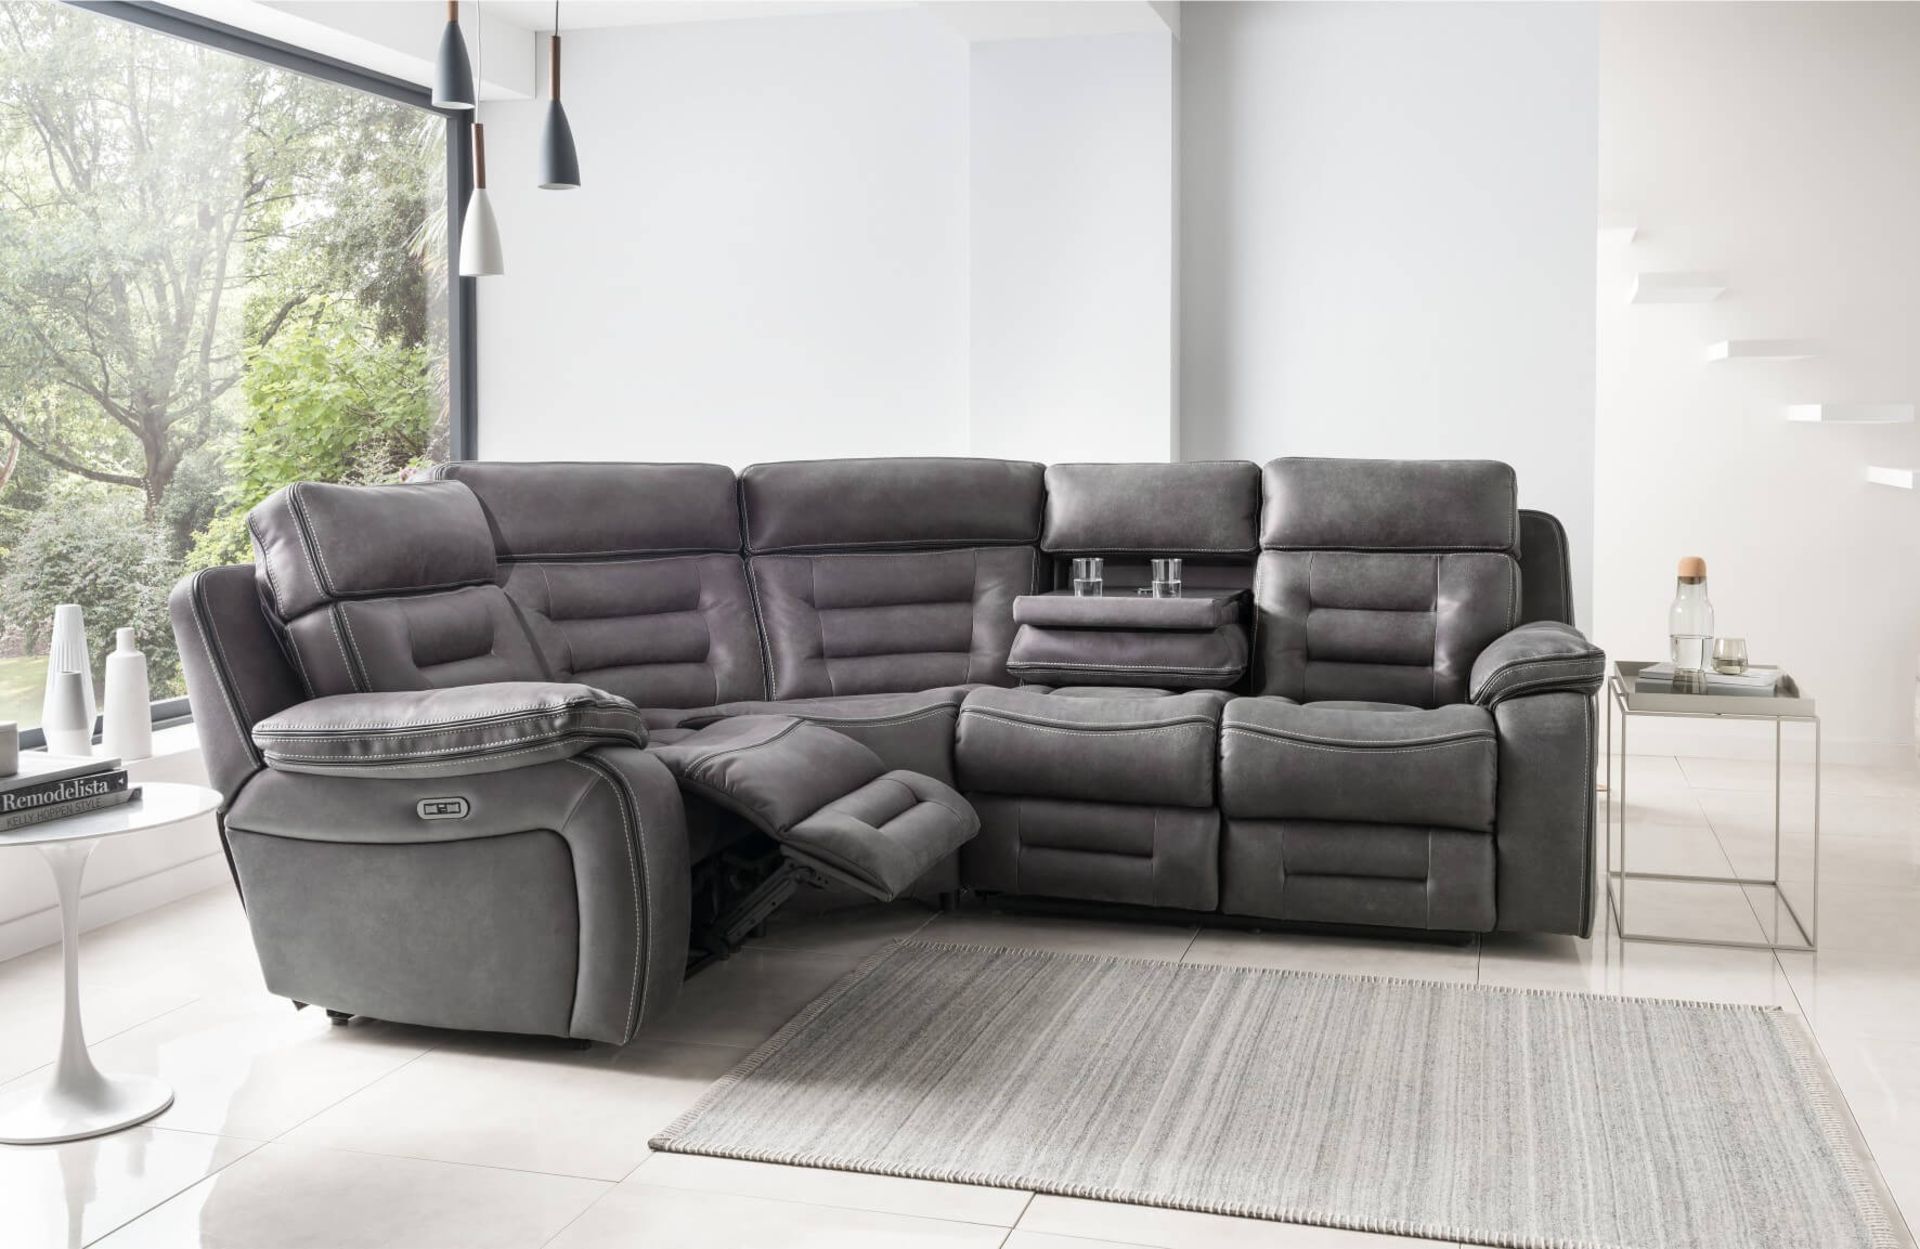 Brand new boxed Sierra tech corner sofa 1c2 in charcoal grey fabric